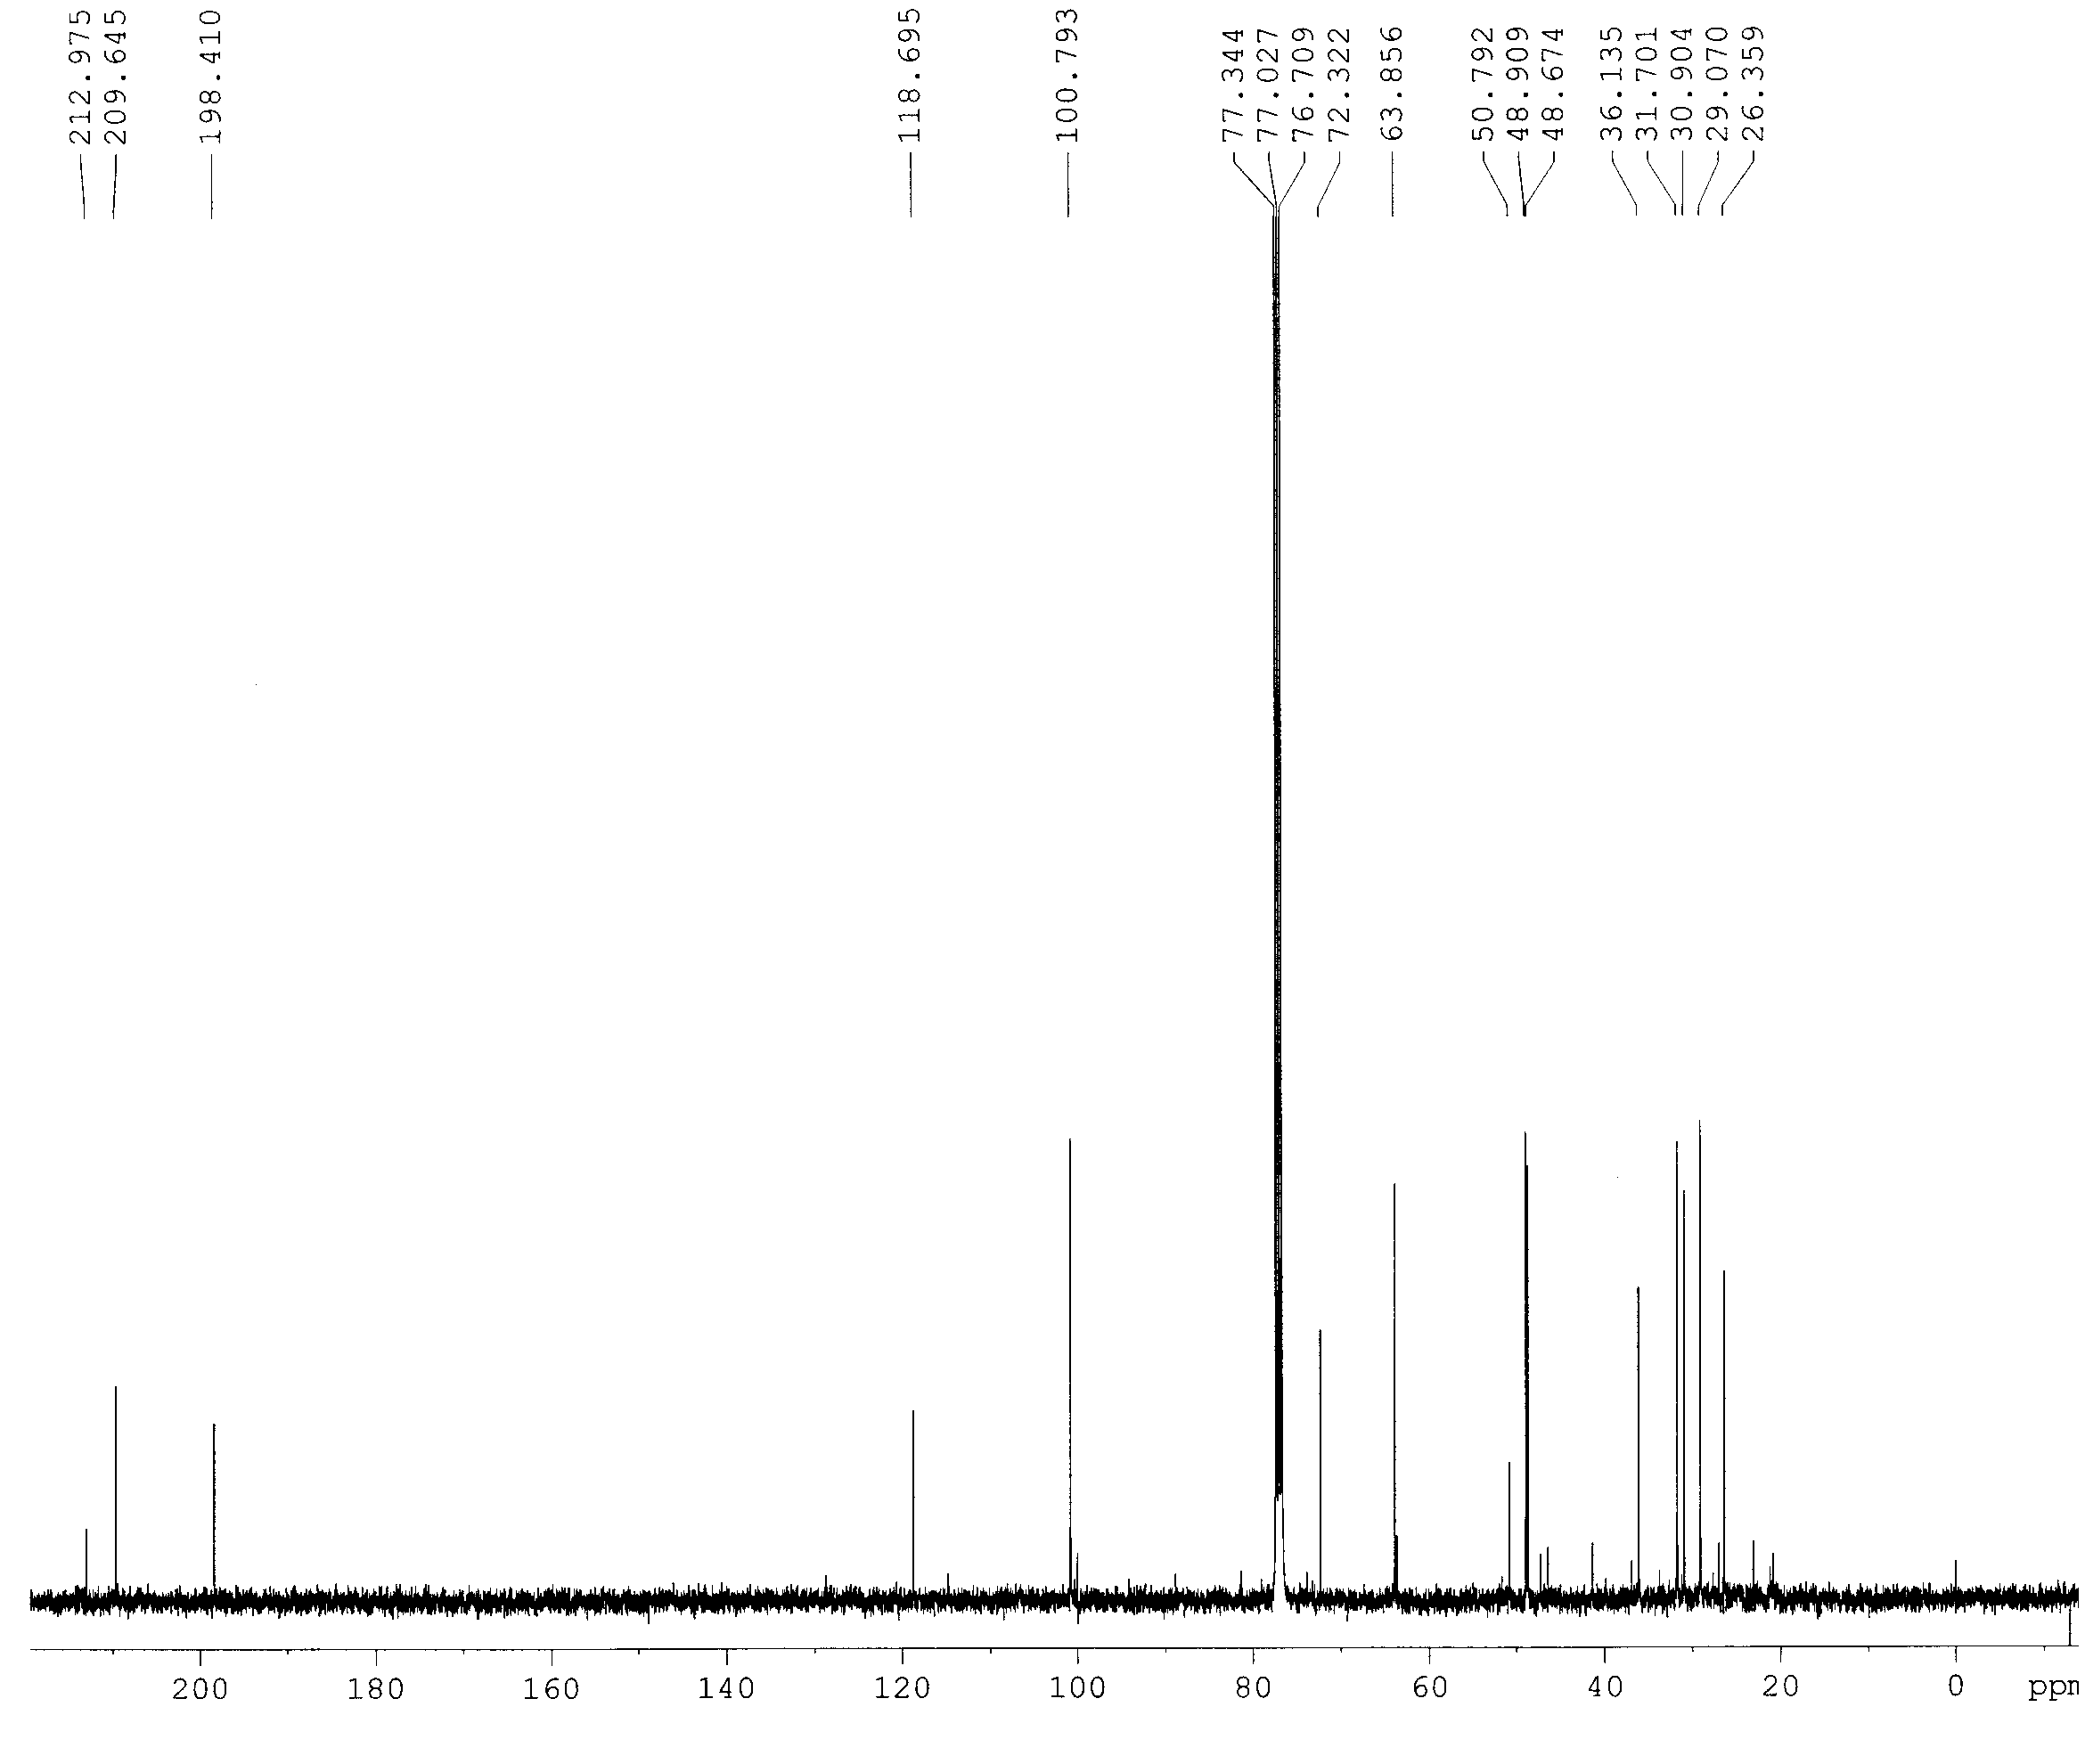 13C-NMR spectrum of compound 6